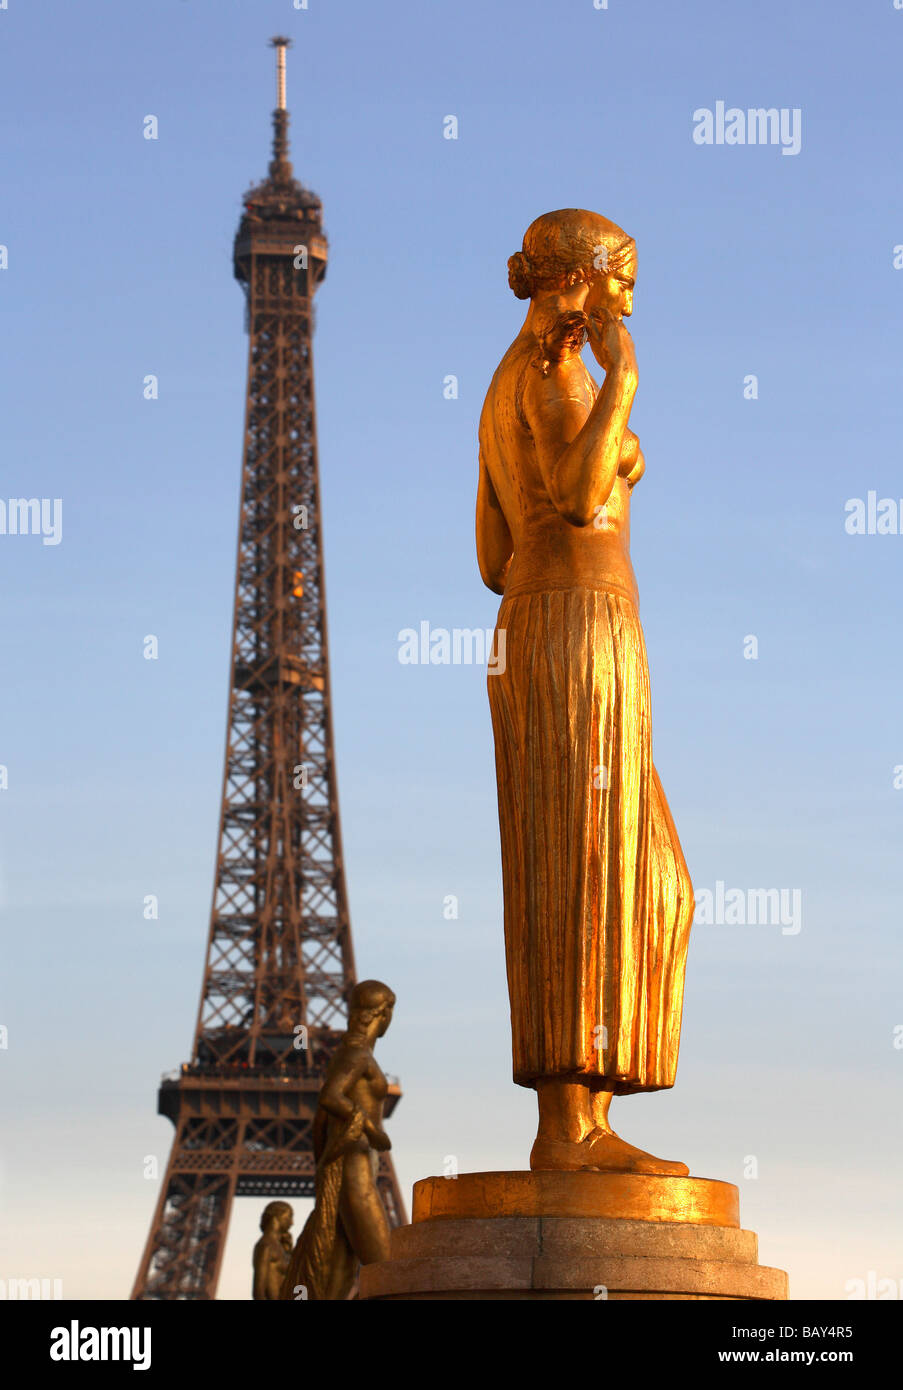 Palais de Chaillot statuette and the Eiffel Tower, Trocadero, Paris, France Stock Photo